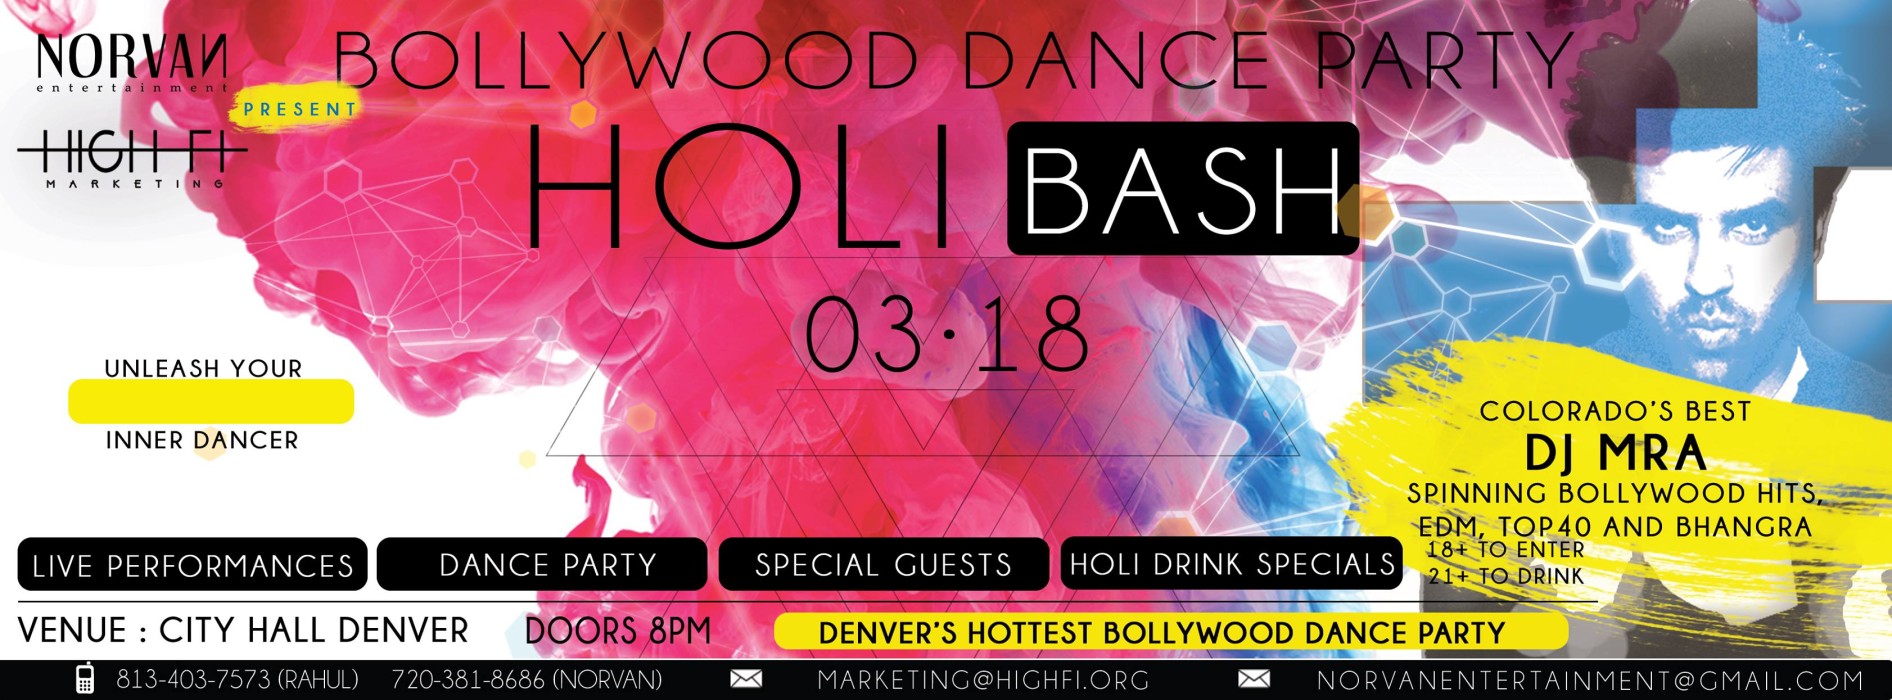 Bollywood Dance Party 2017 Denver